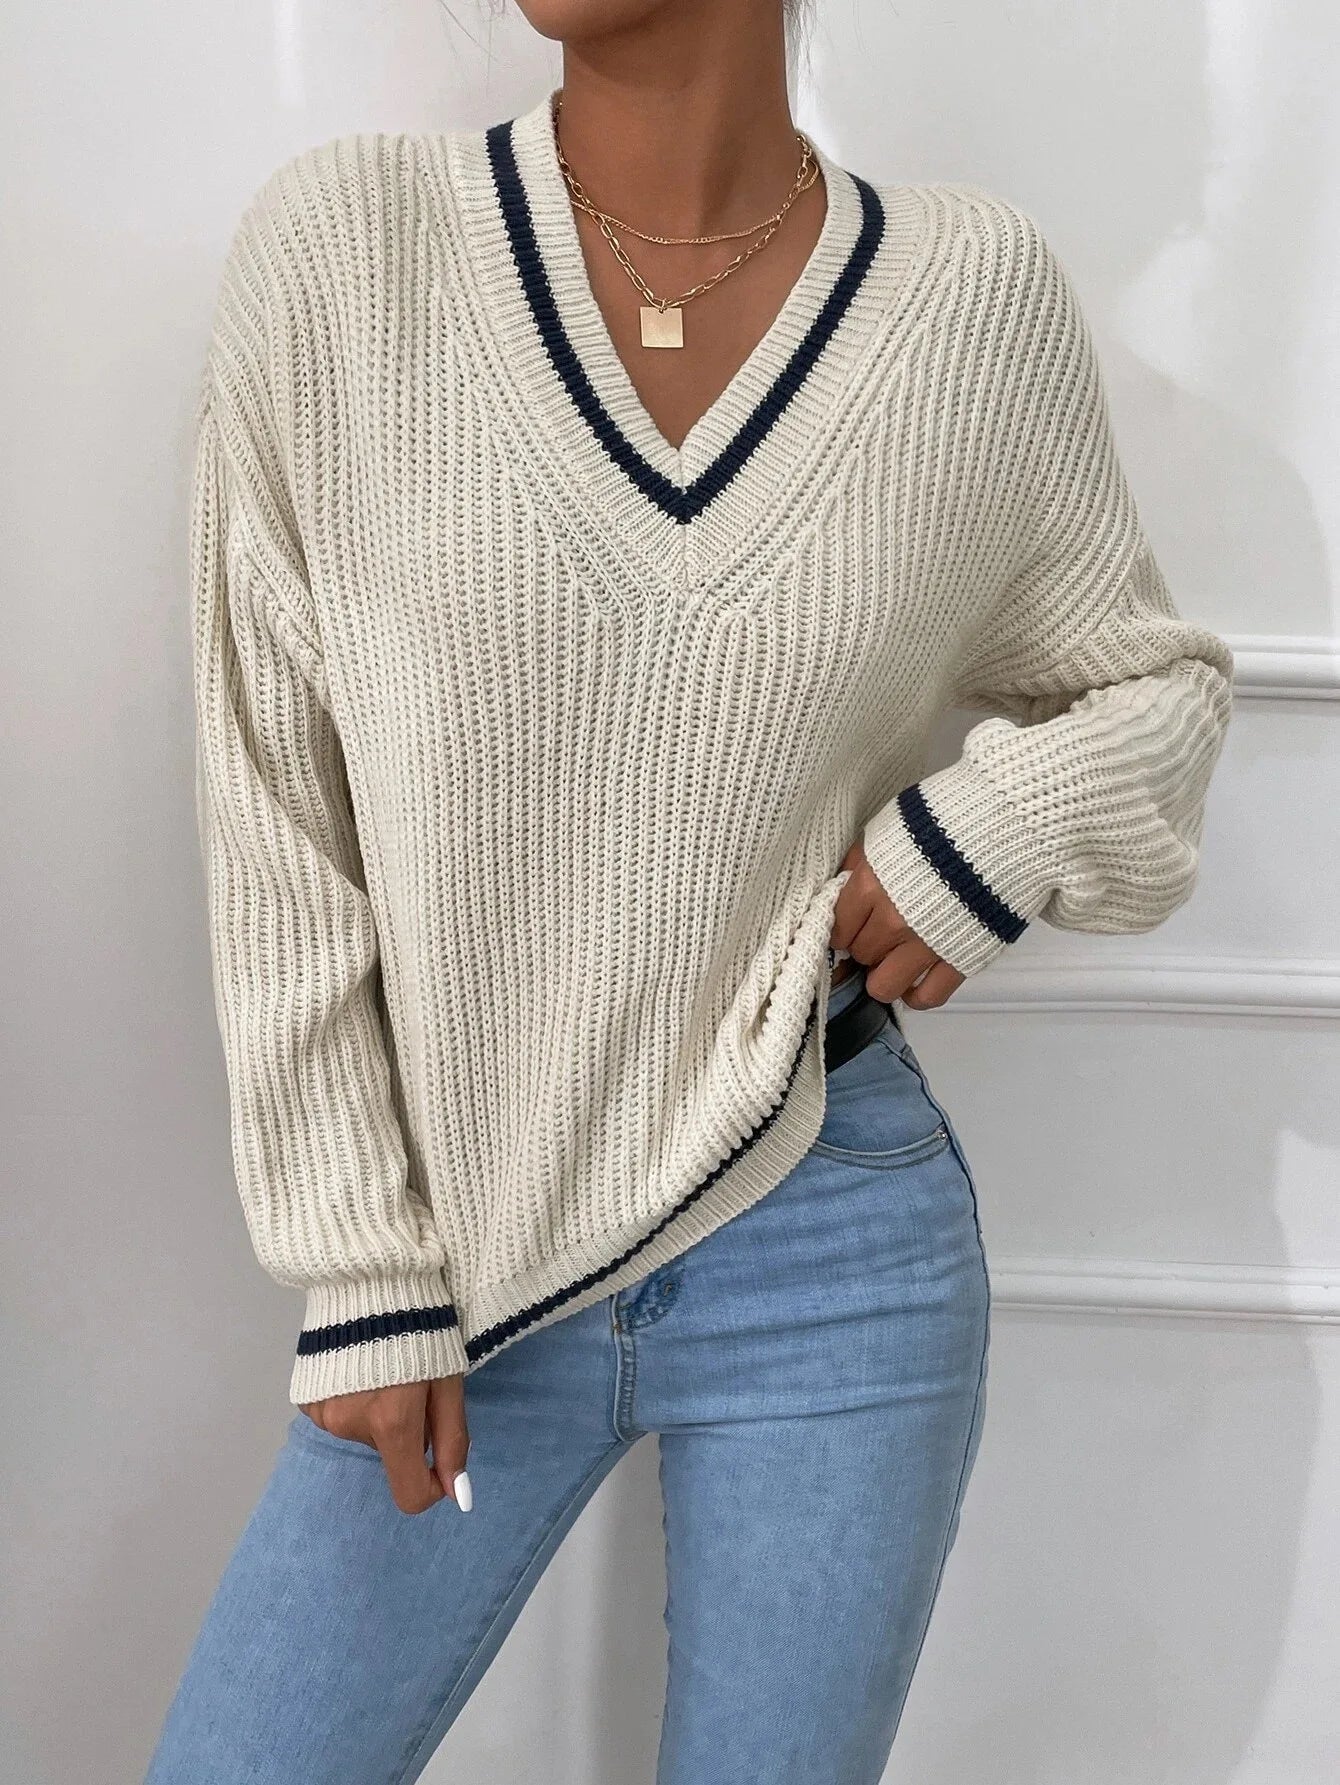 Alana KRE - V-Ausschnitt Pullover für Frauen